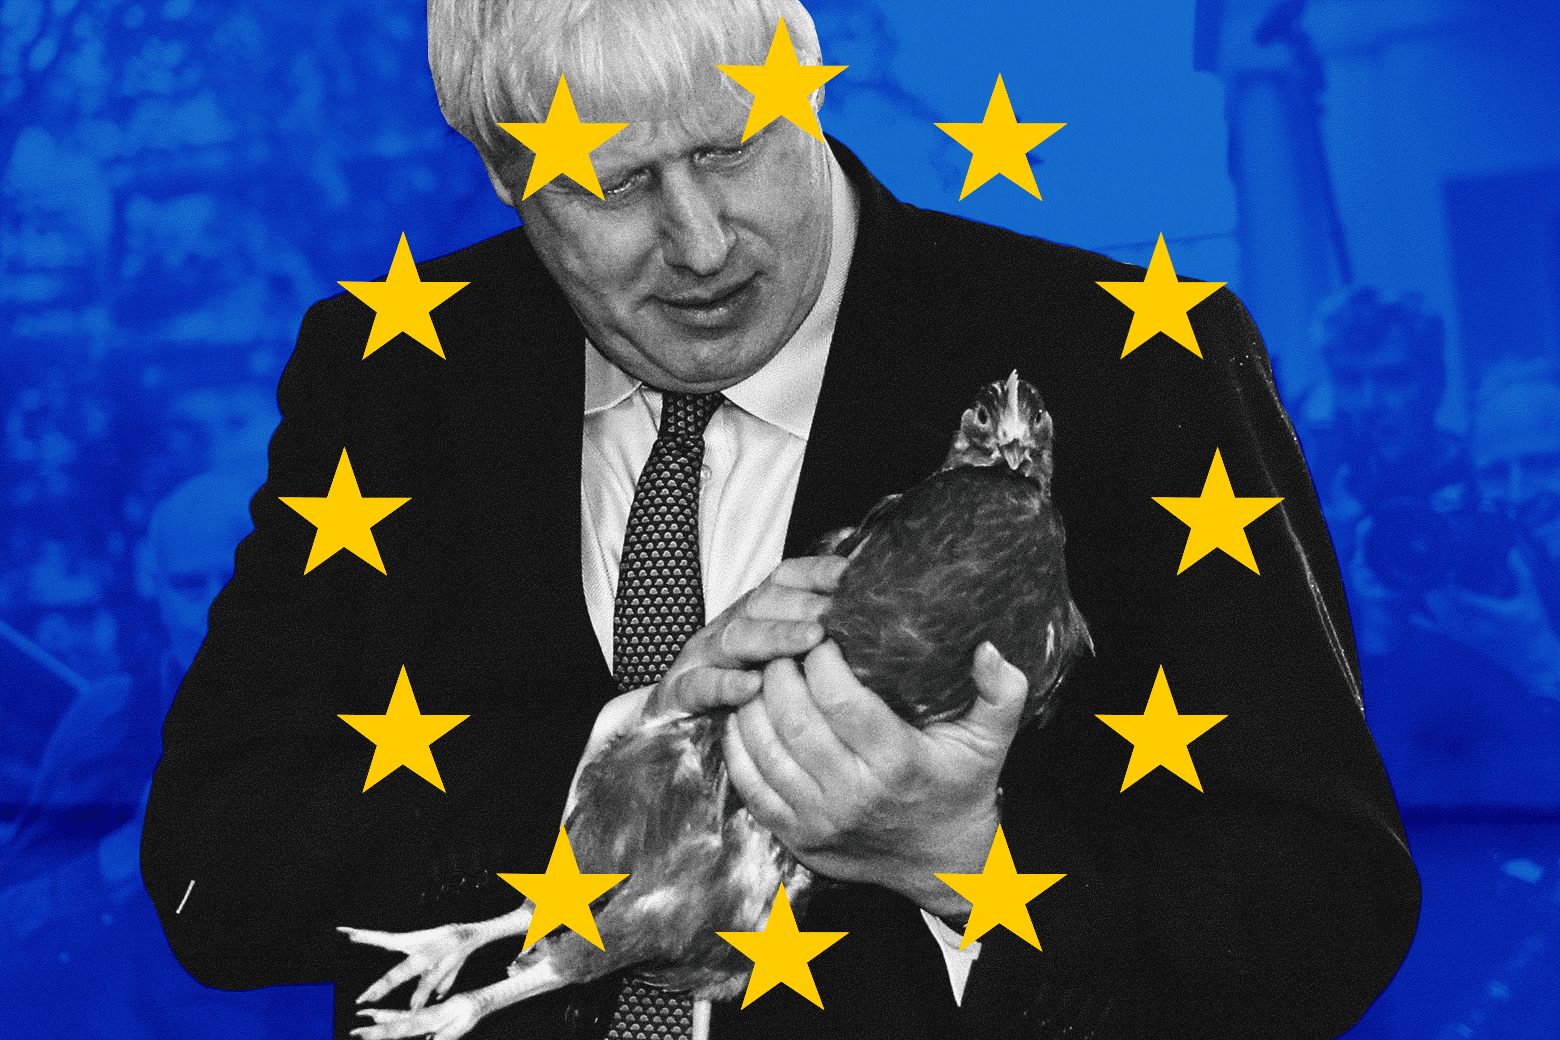 Boris Johnson holds a chicken.